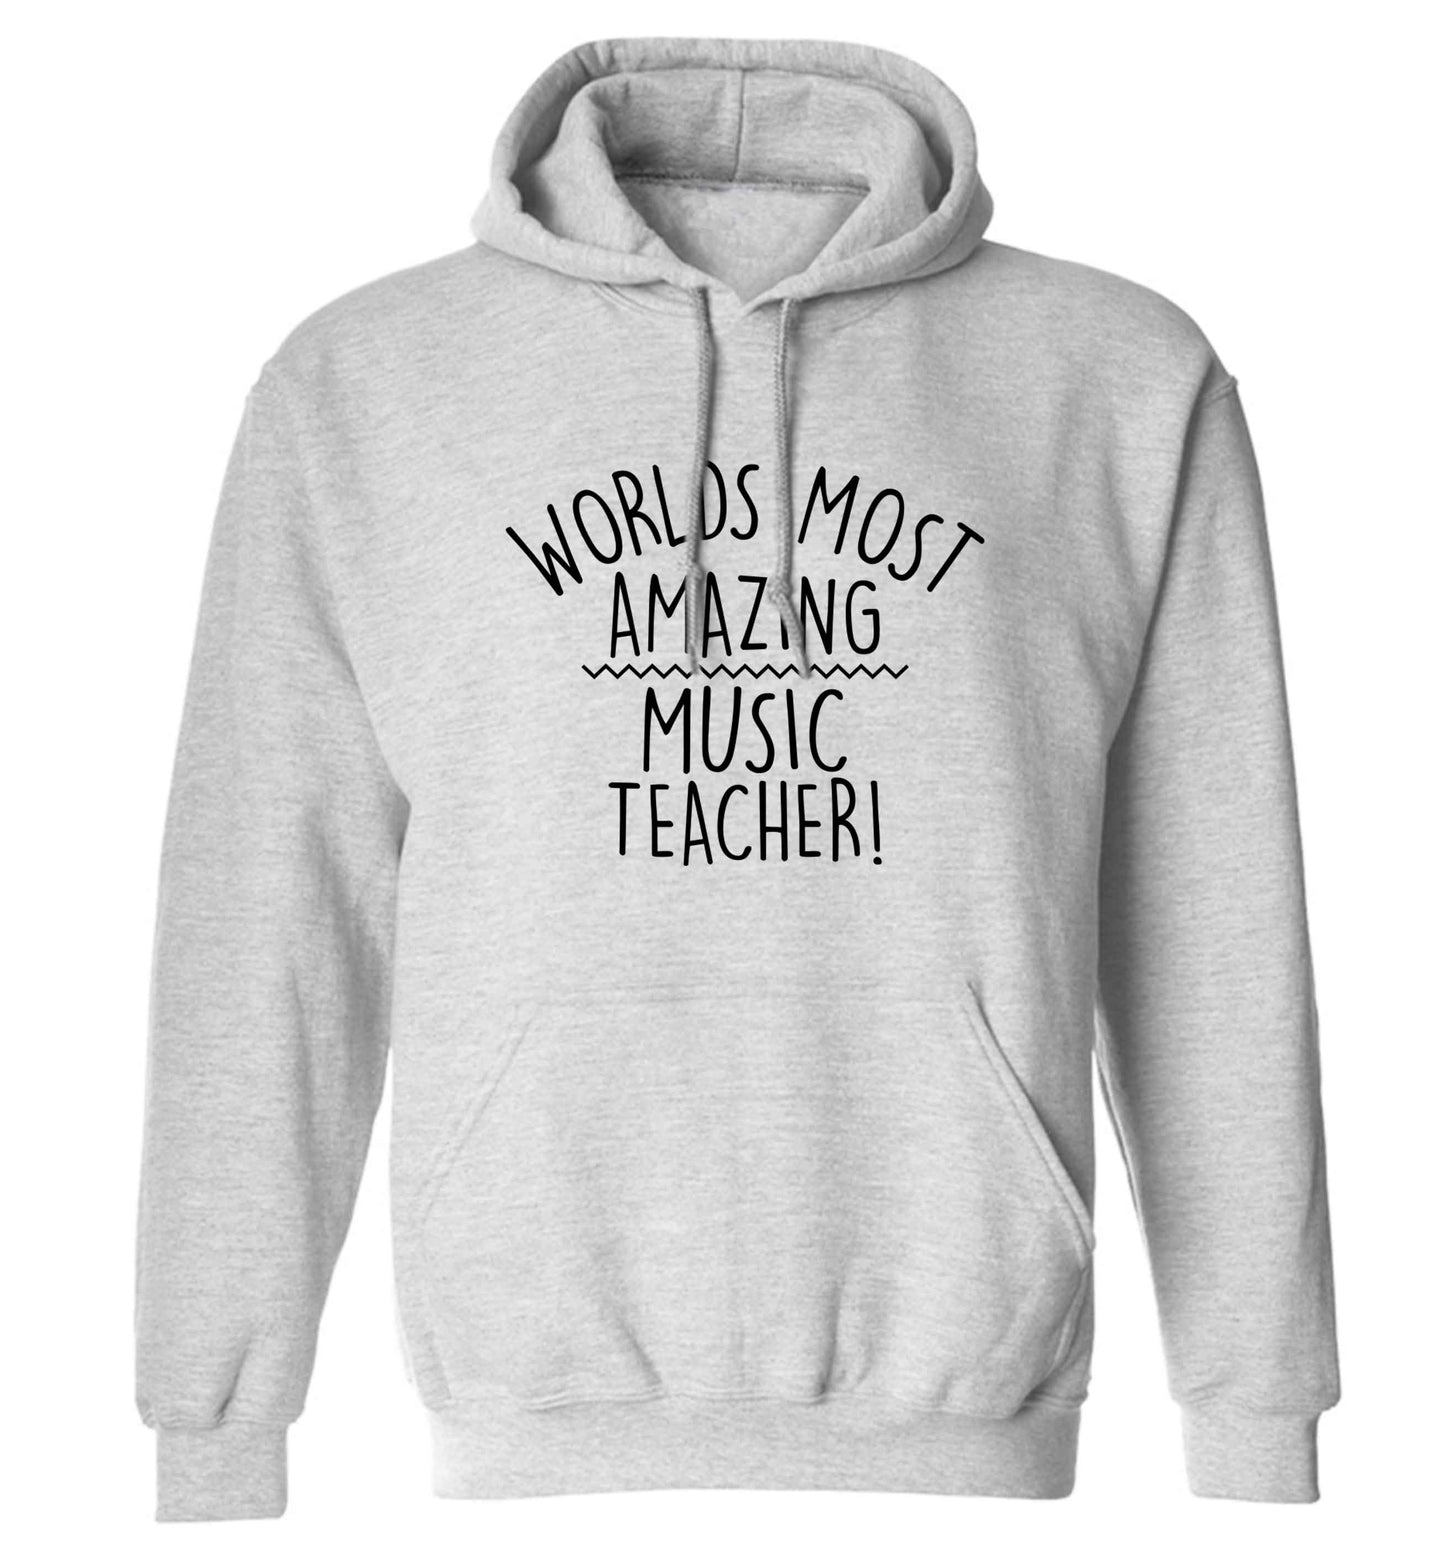 Worlds most amazing music teacher adults unisex grey hoodie 2XL